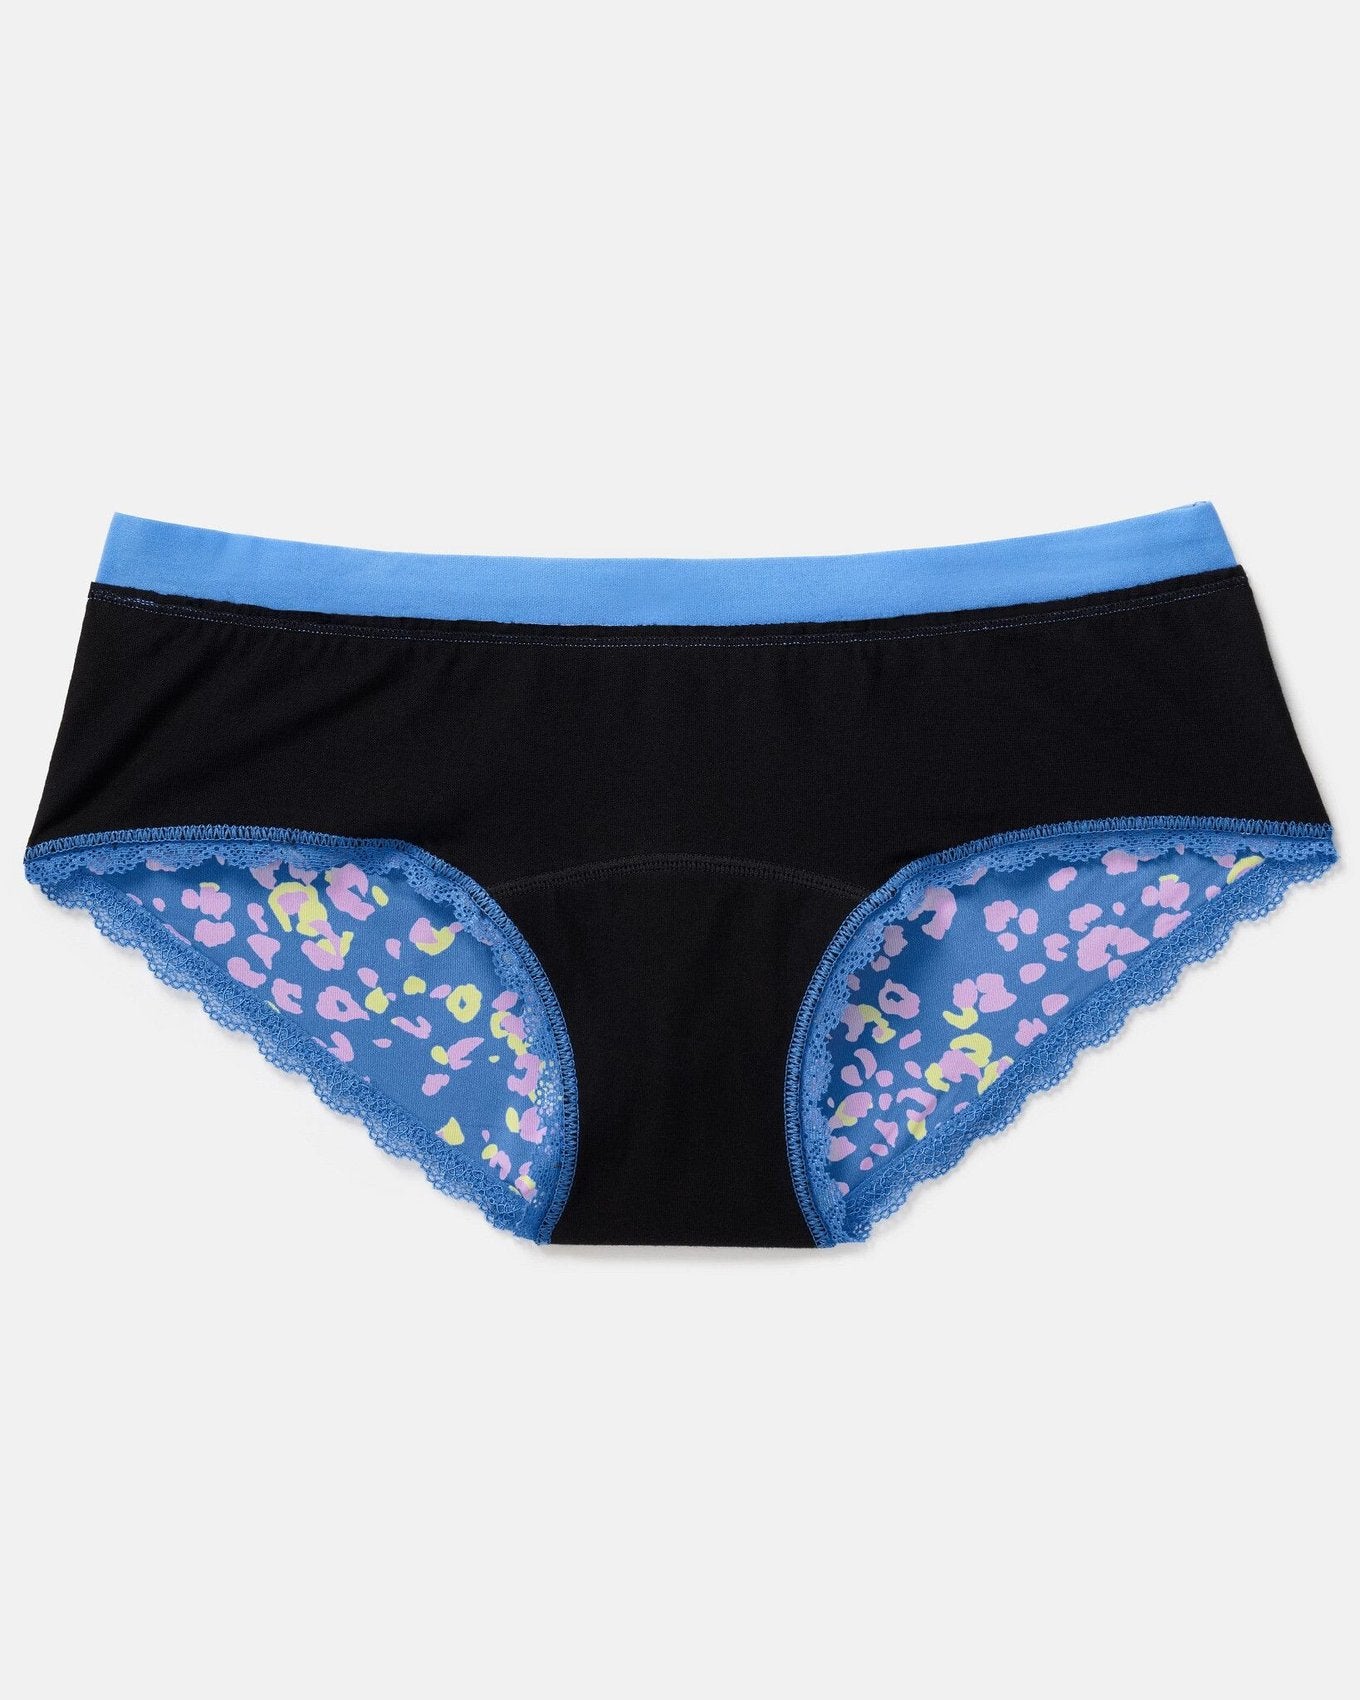 Joyja Olivia period-proof panty in color Jungle Confetti C01 and shape hipster